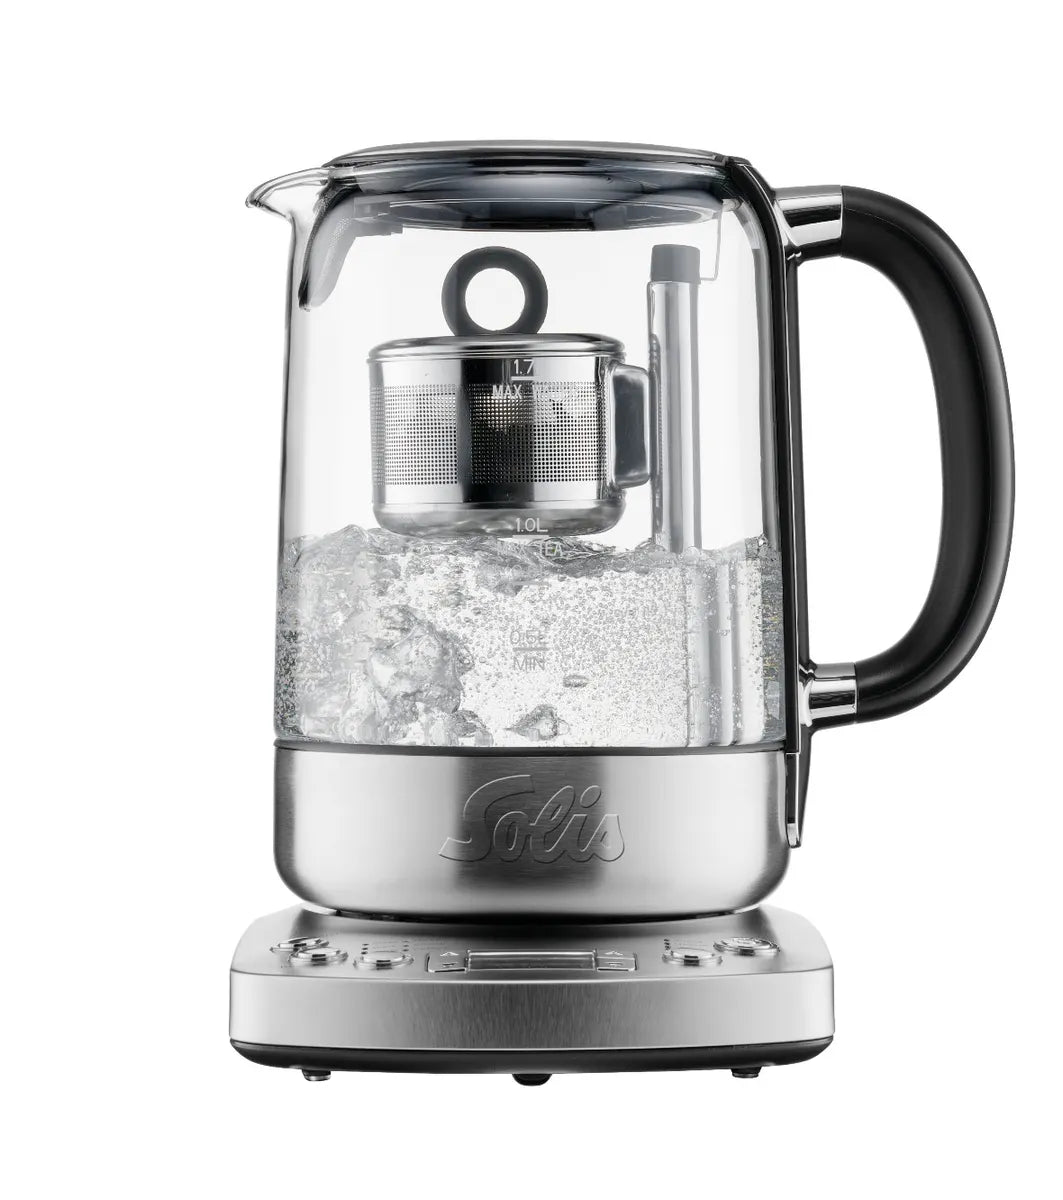 Solis Wasserkocher Tea Kettle Automatic - 1.7L